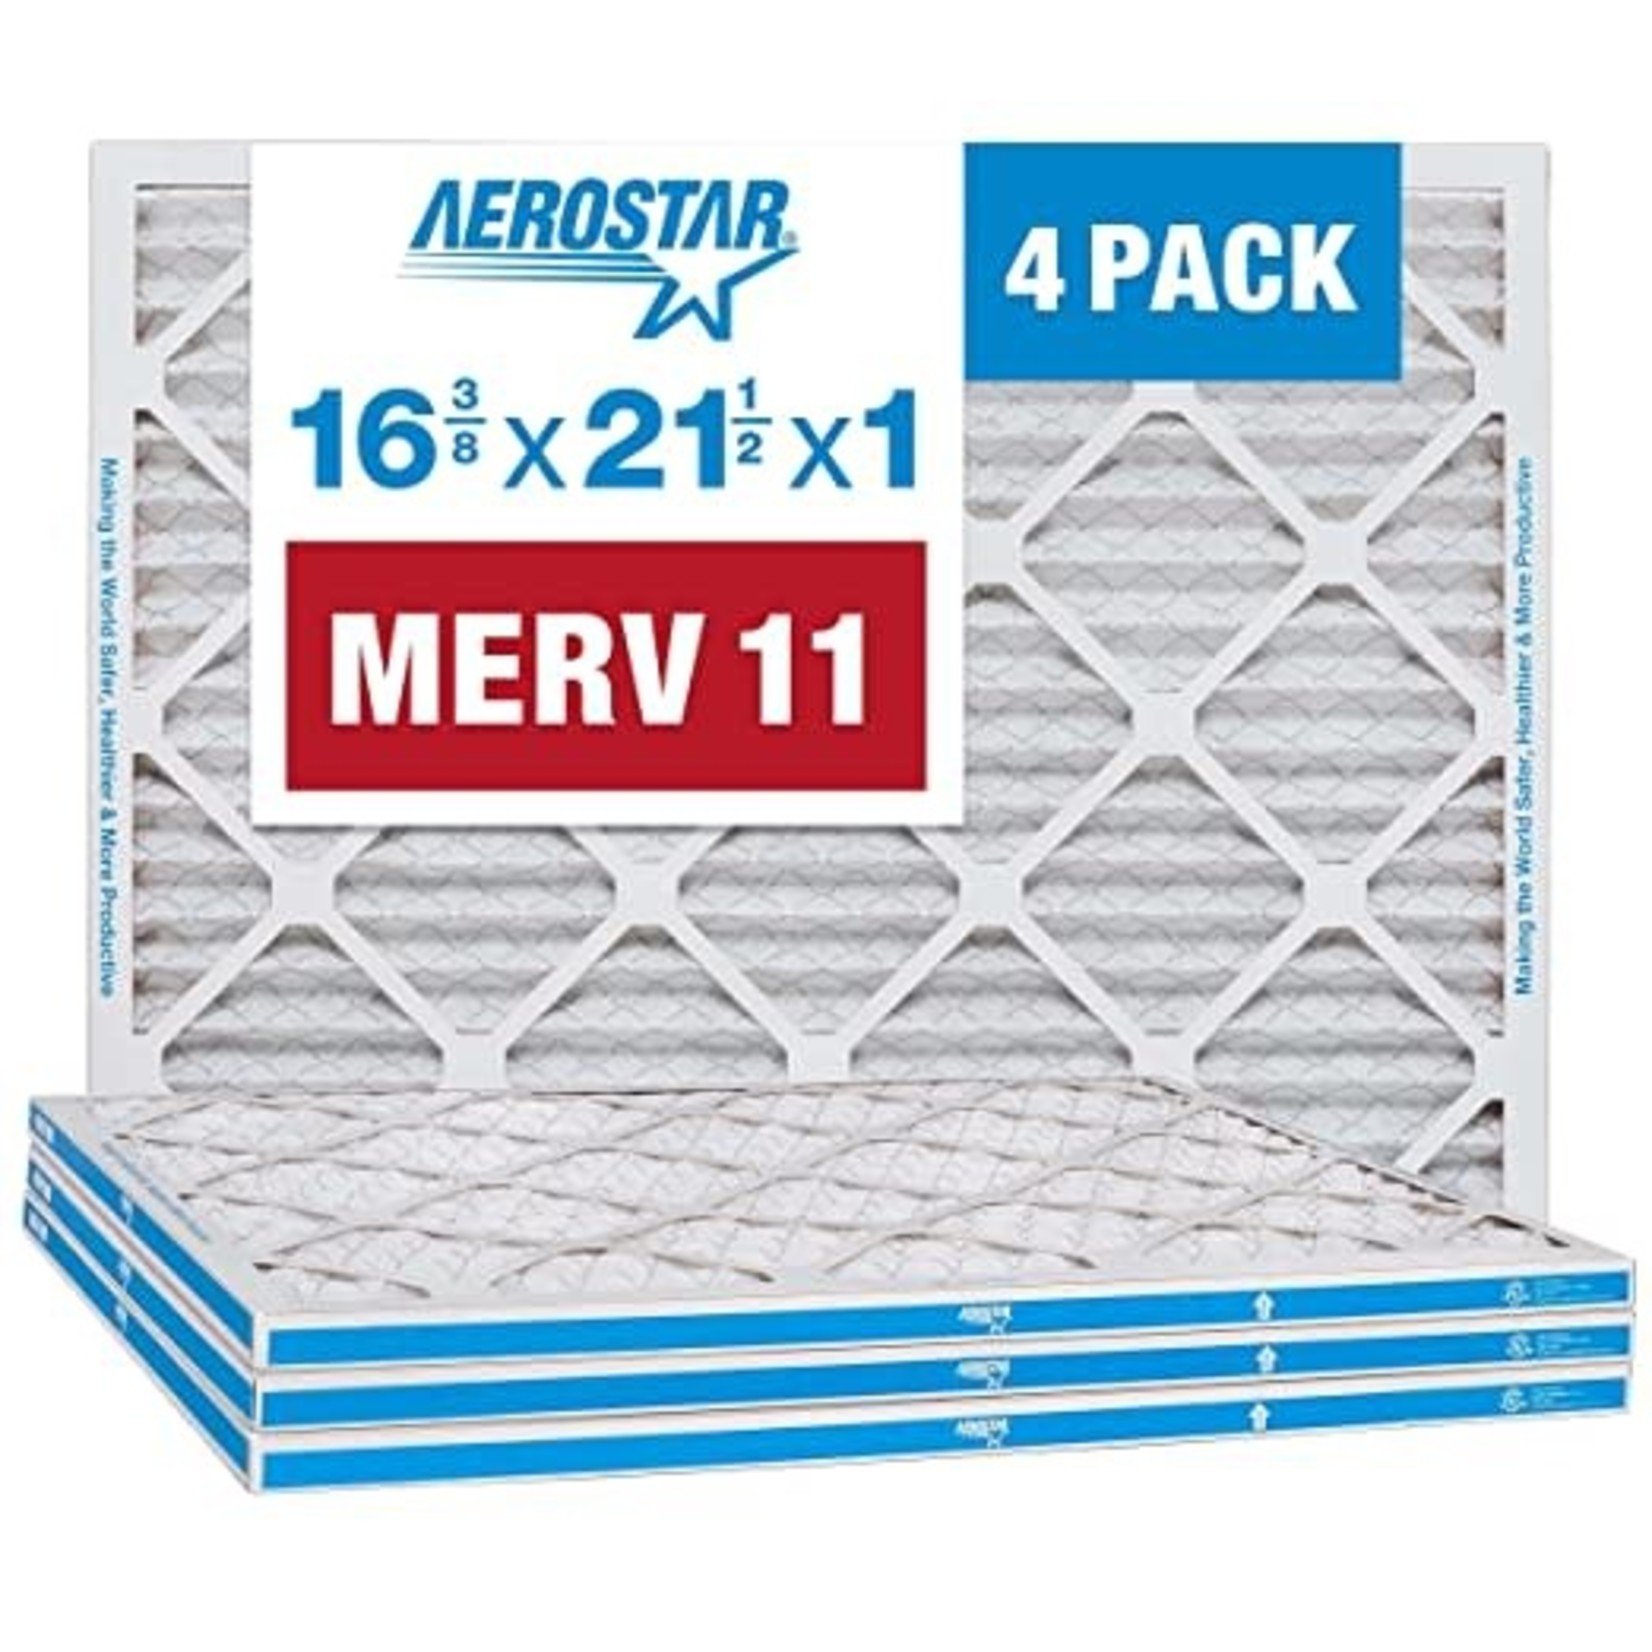 Aerostar 16 3/8 x 21 1/2 x 1 MERV 11 Pleated Air Filter, AC Furnace Air Filter, 4 Pack